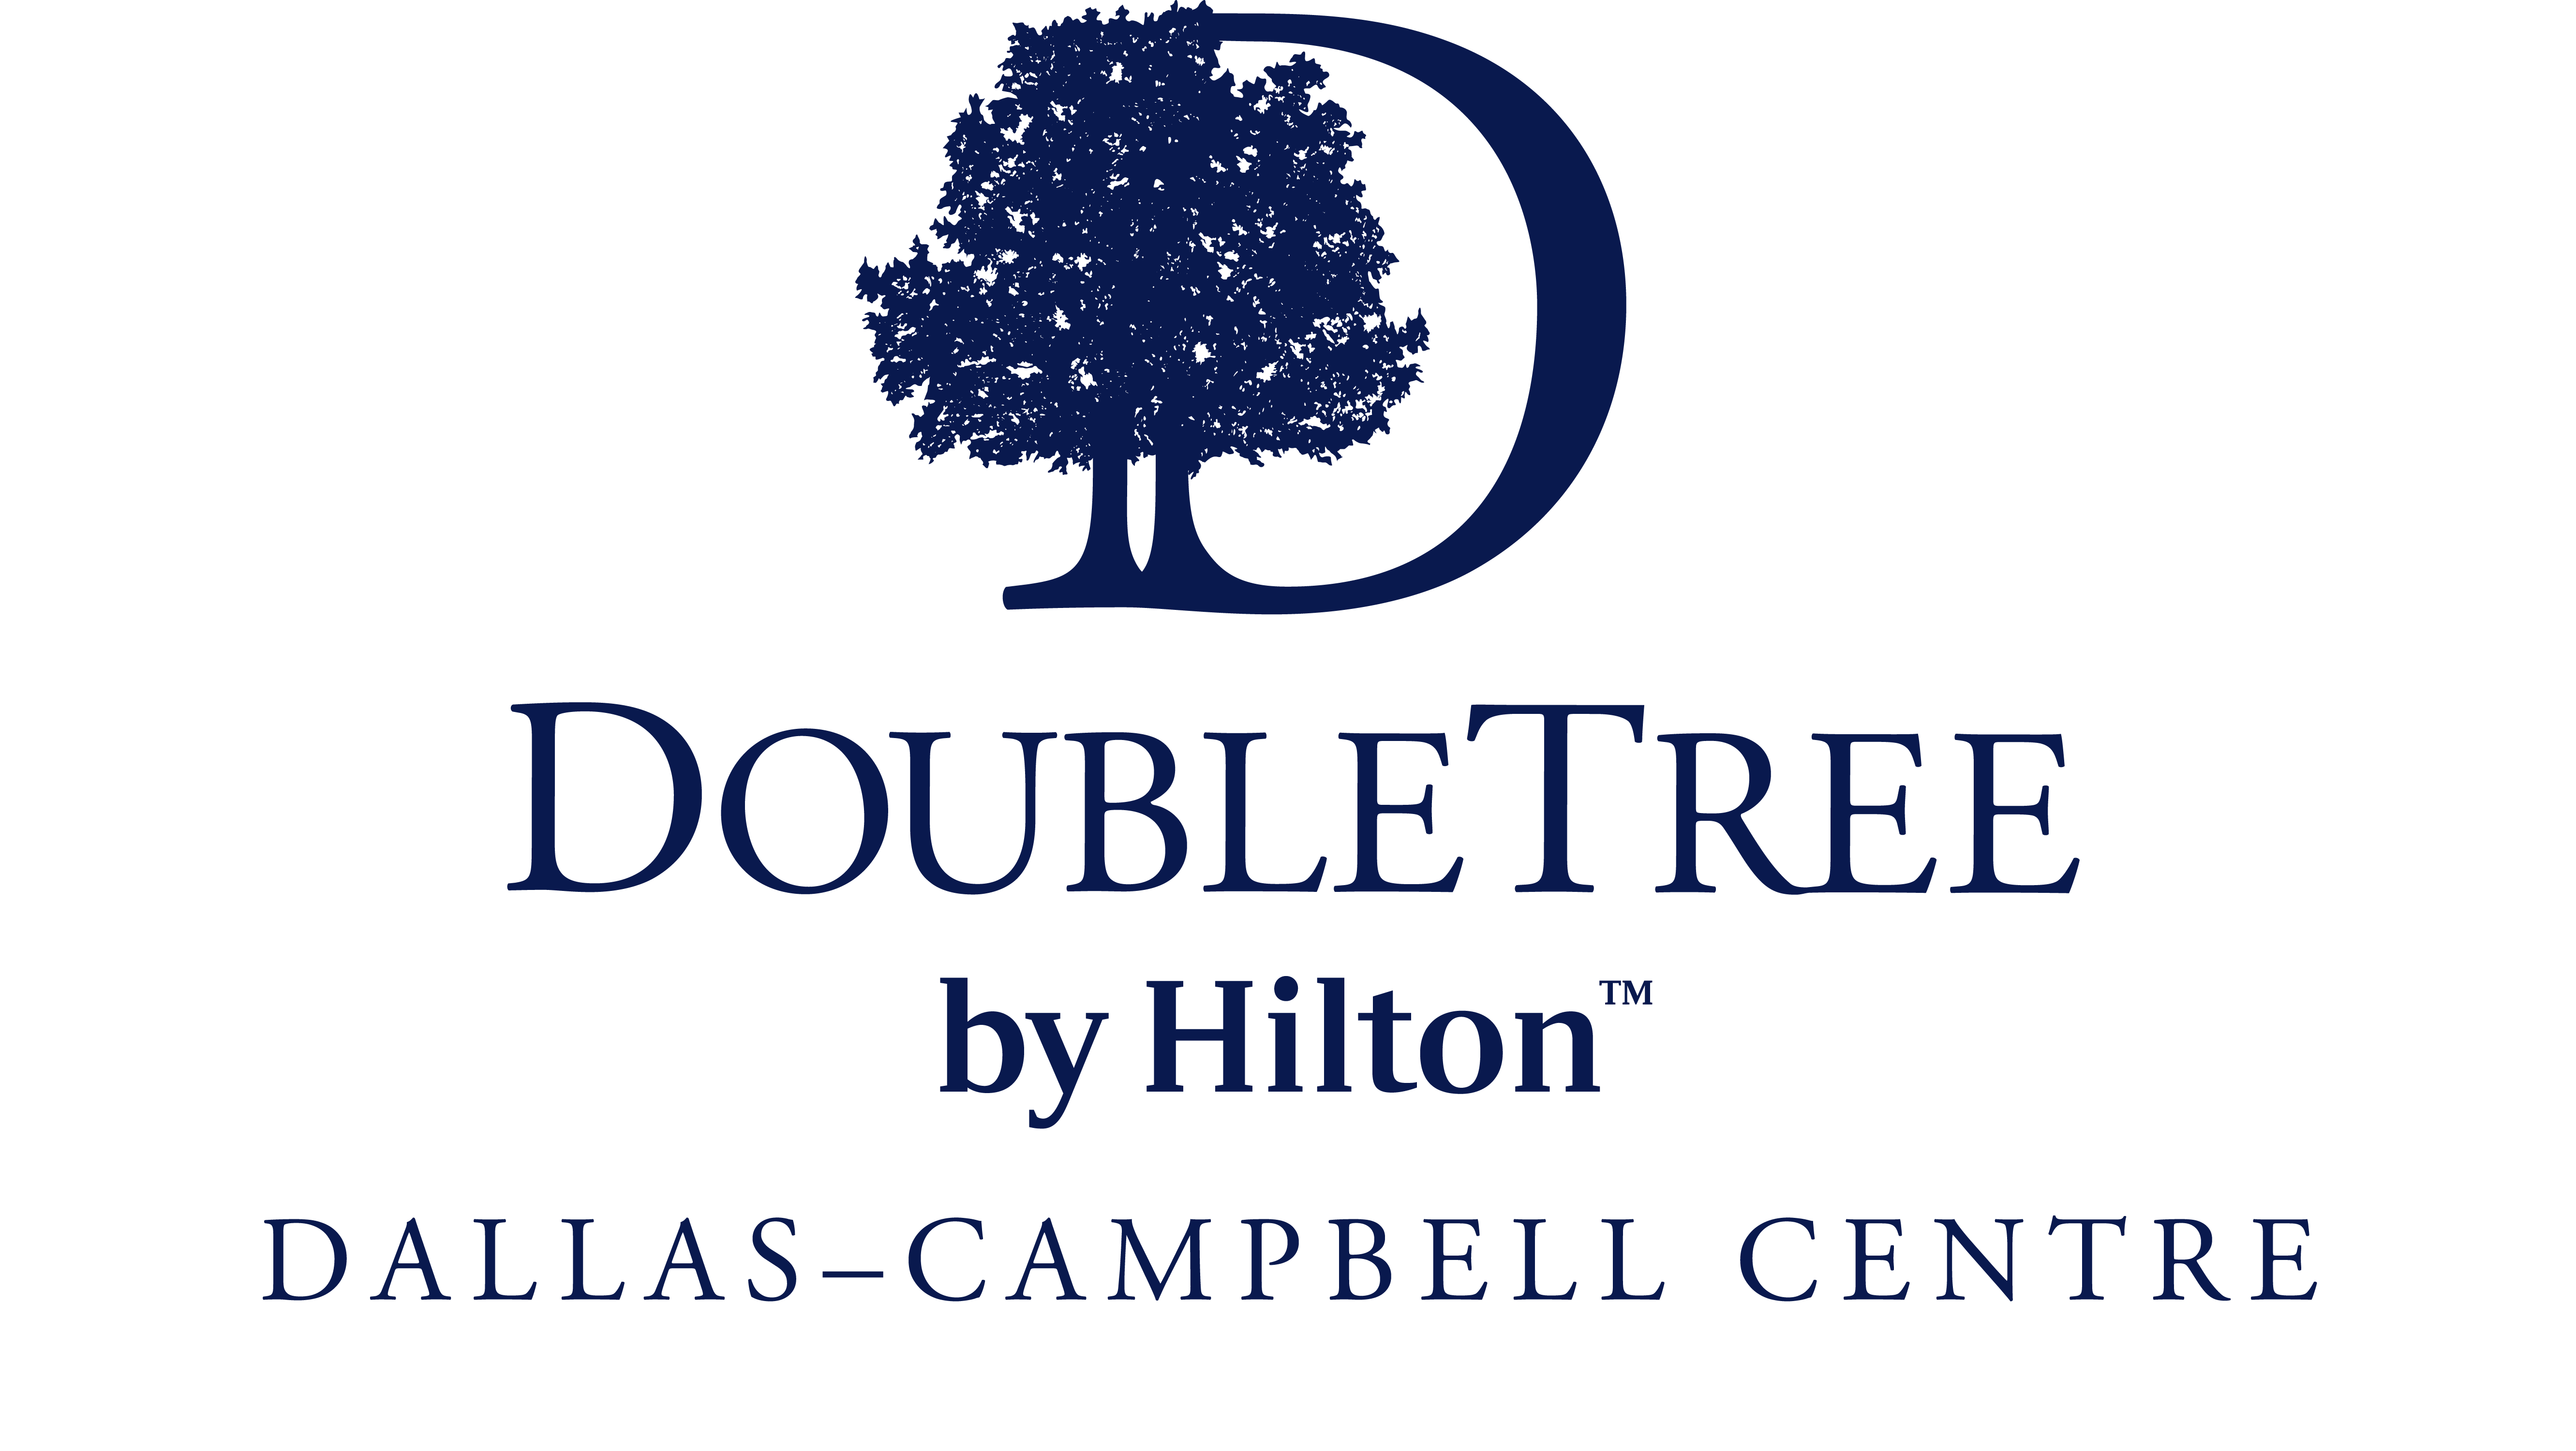 DoubleTree by Hilton Dallas - Campbell Center logo